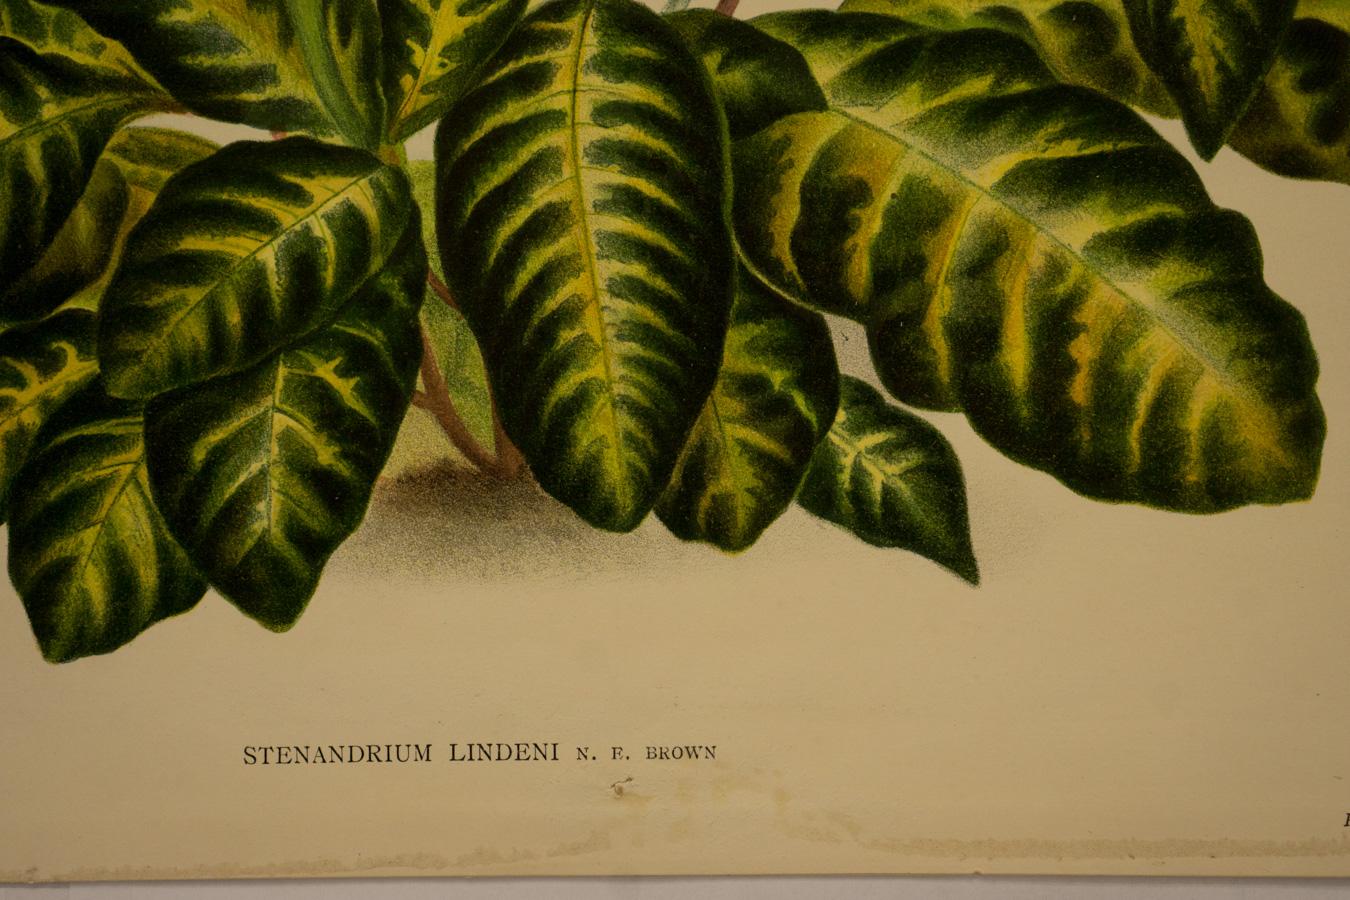 Stenandrium Lindeni N.E. Brown - Print by Peter De Pannemaeker